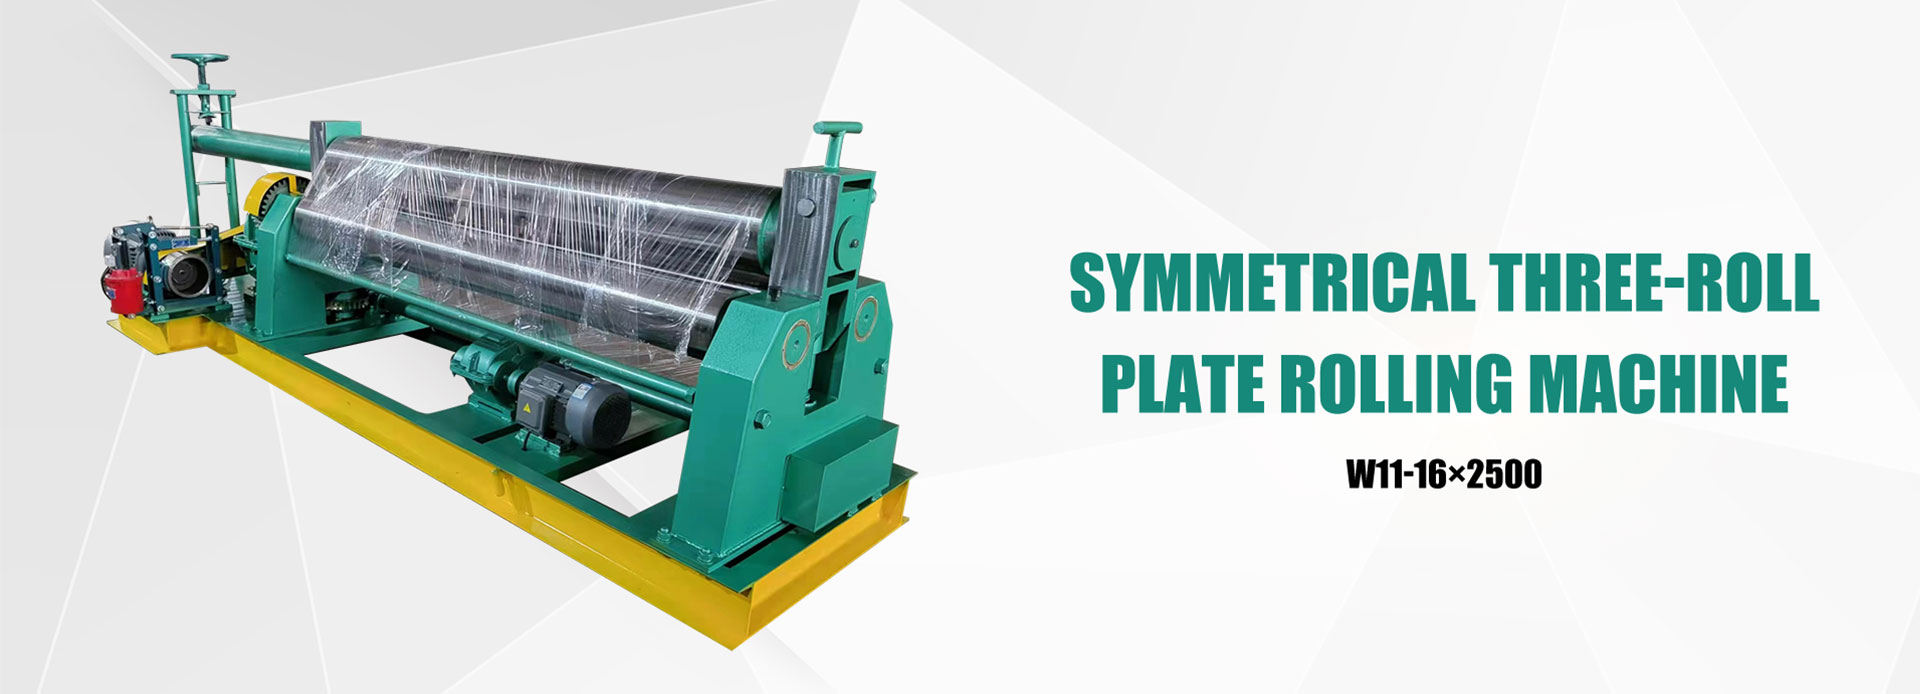 I-Symmetrical Three-roll Plate Rolling Machine Iyathengiswa